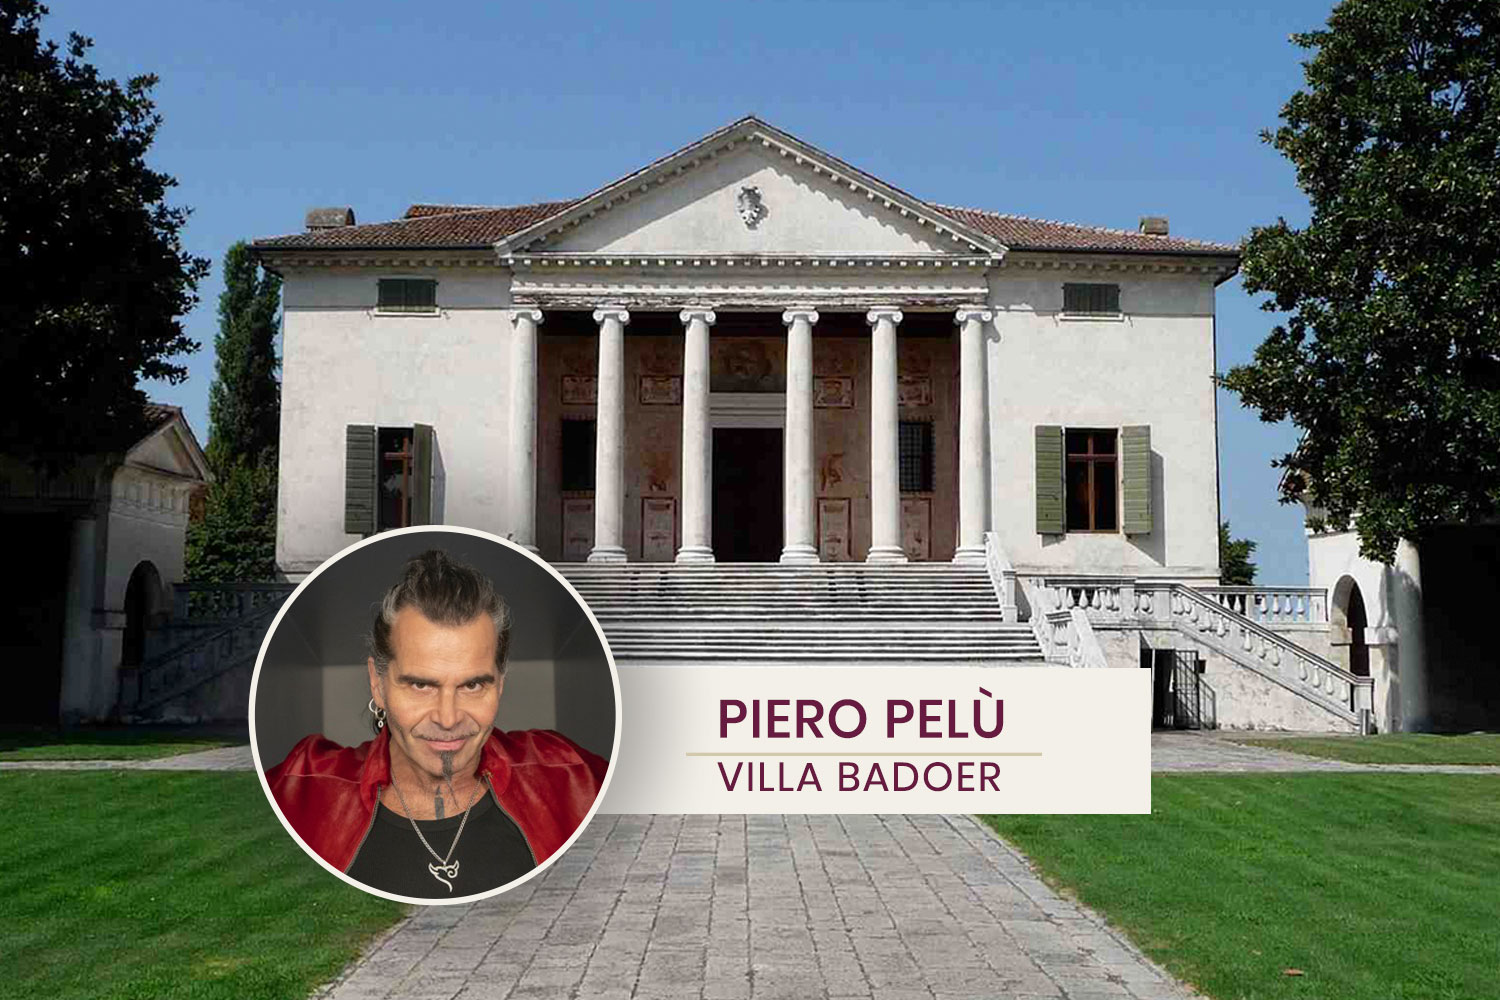 Piero Pelù in Villa Badoer: accessi online esauriti